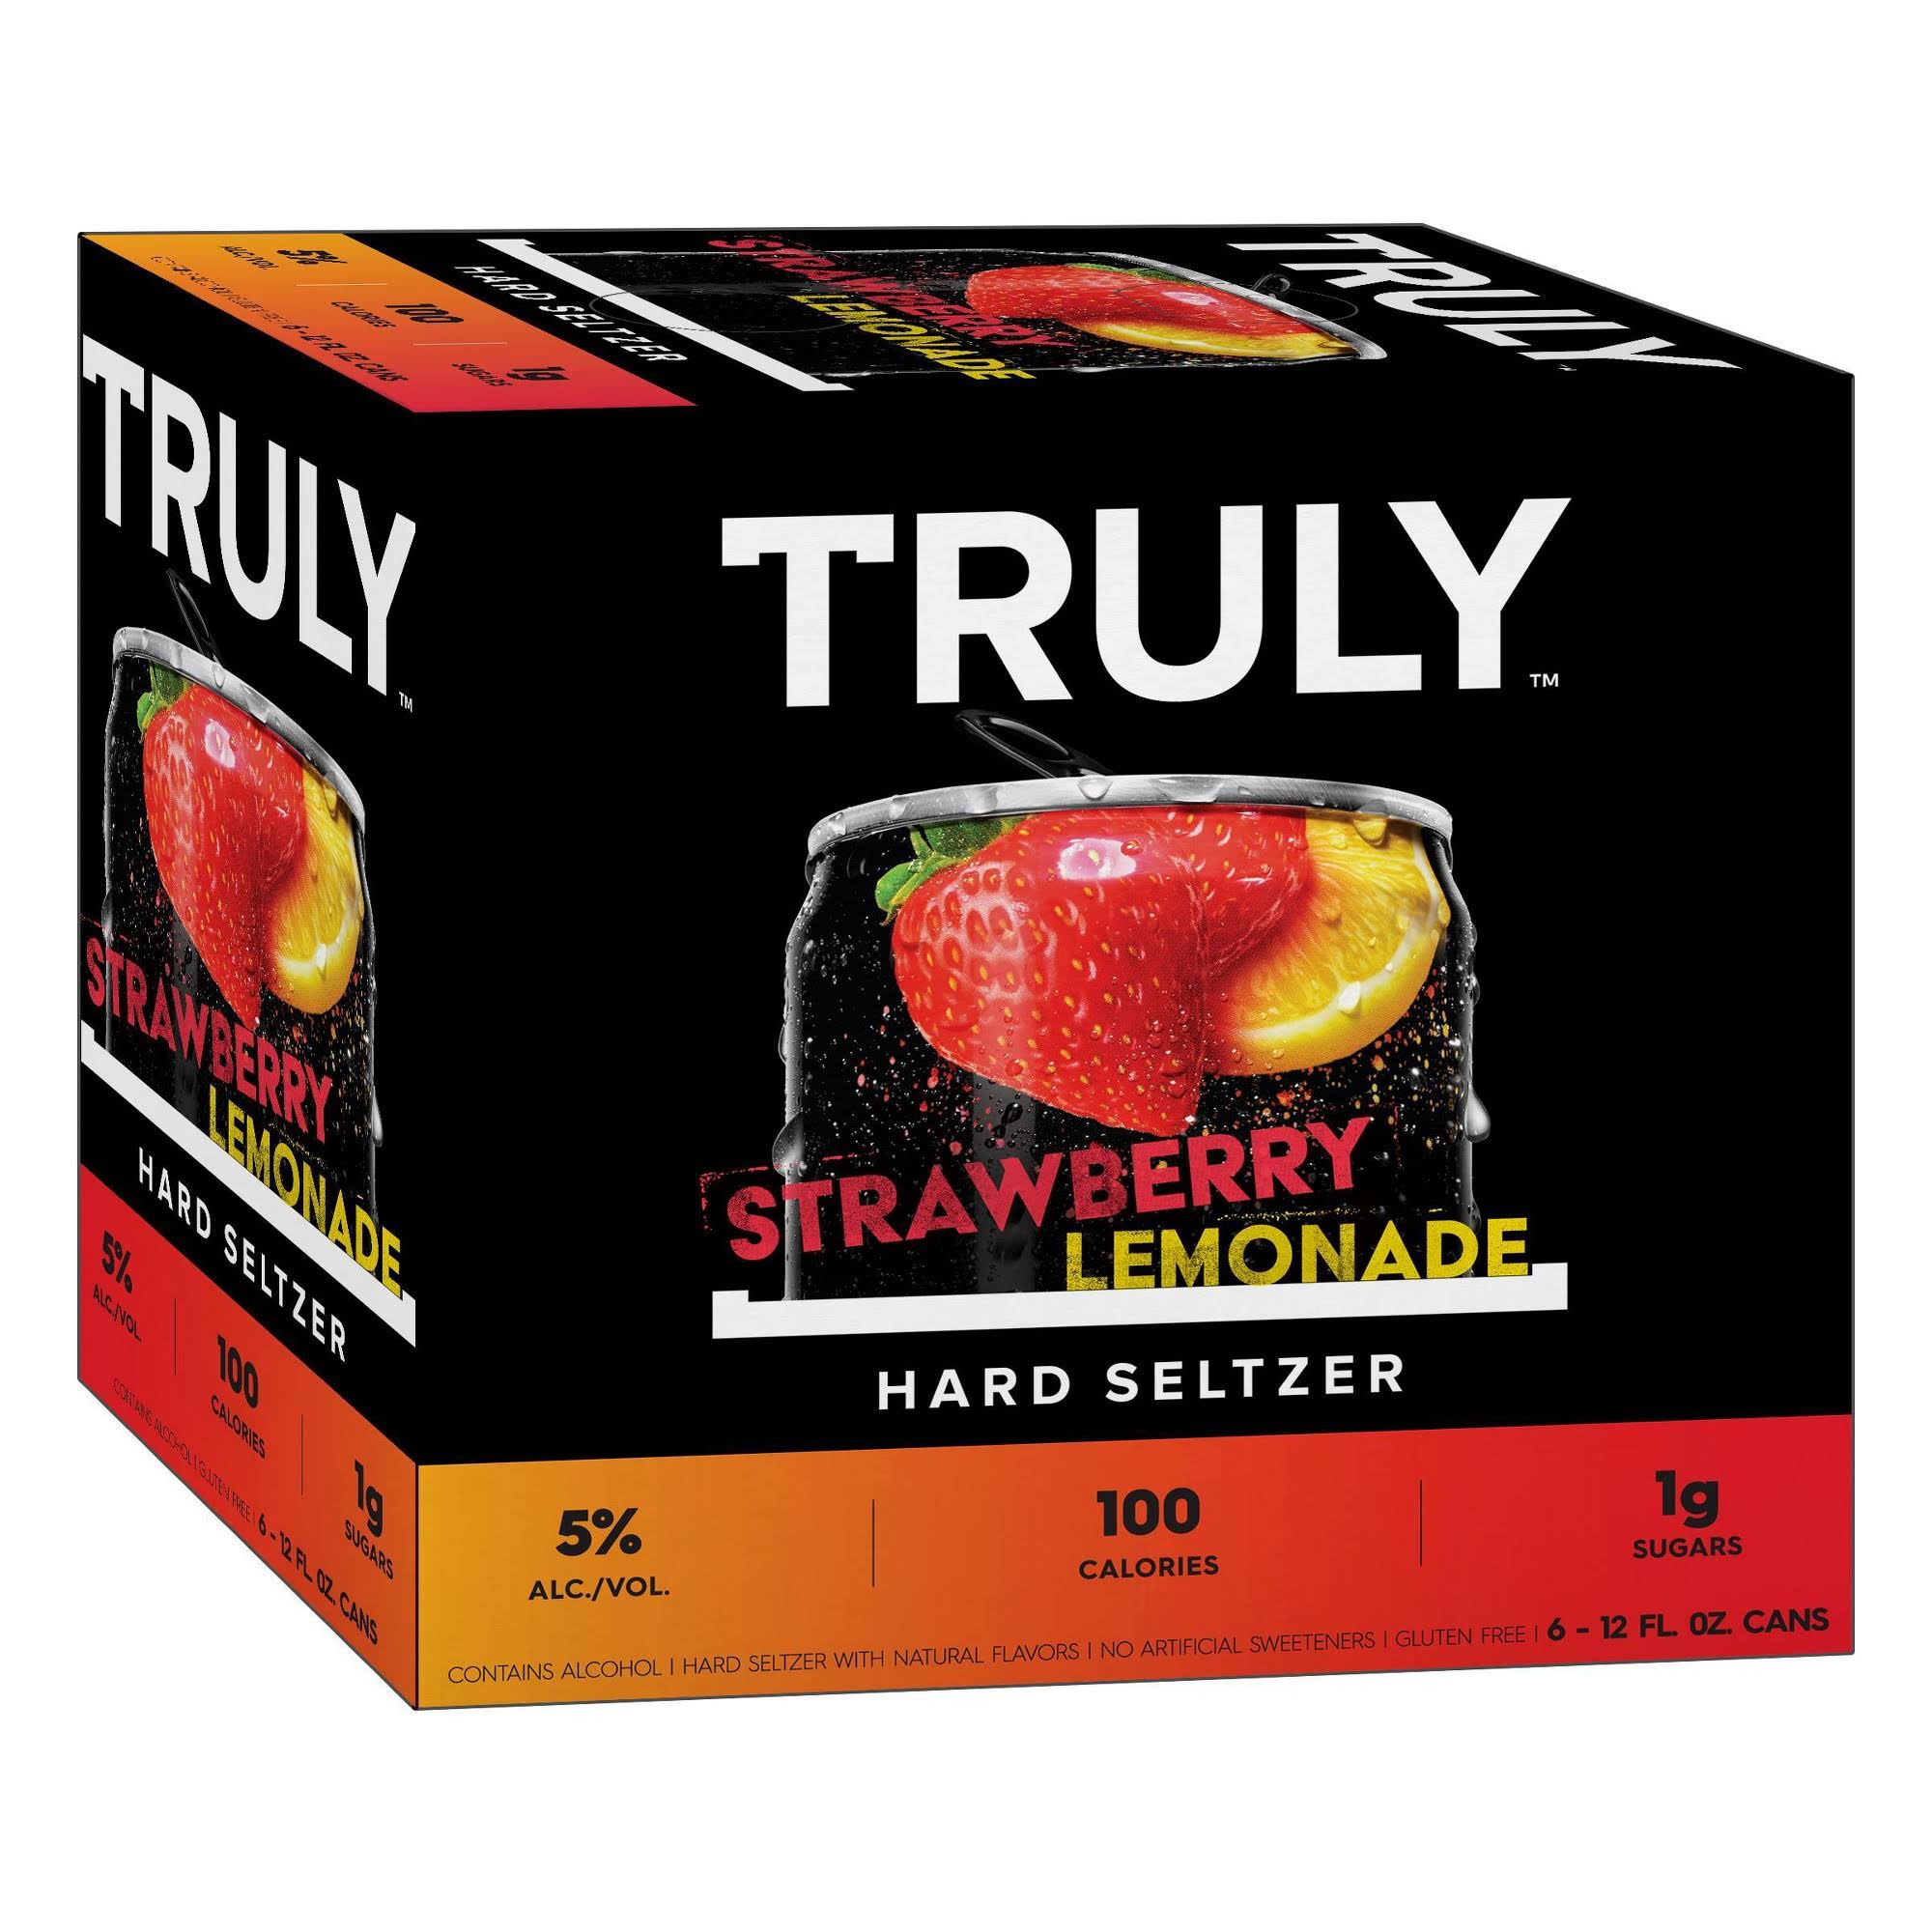 Truly Hard Seltzer, Strawberry Lemonade - 6 pack, 12 fl oz cans